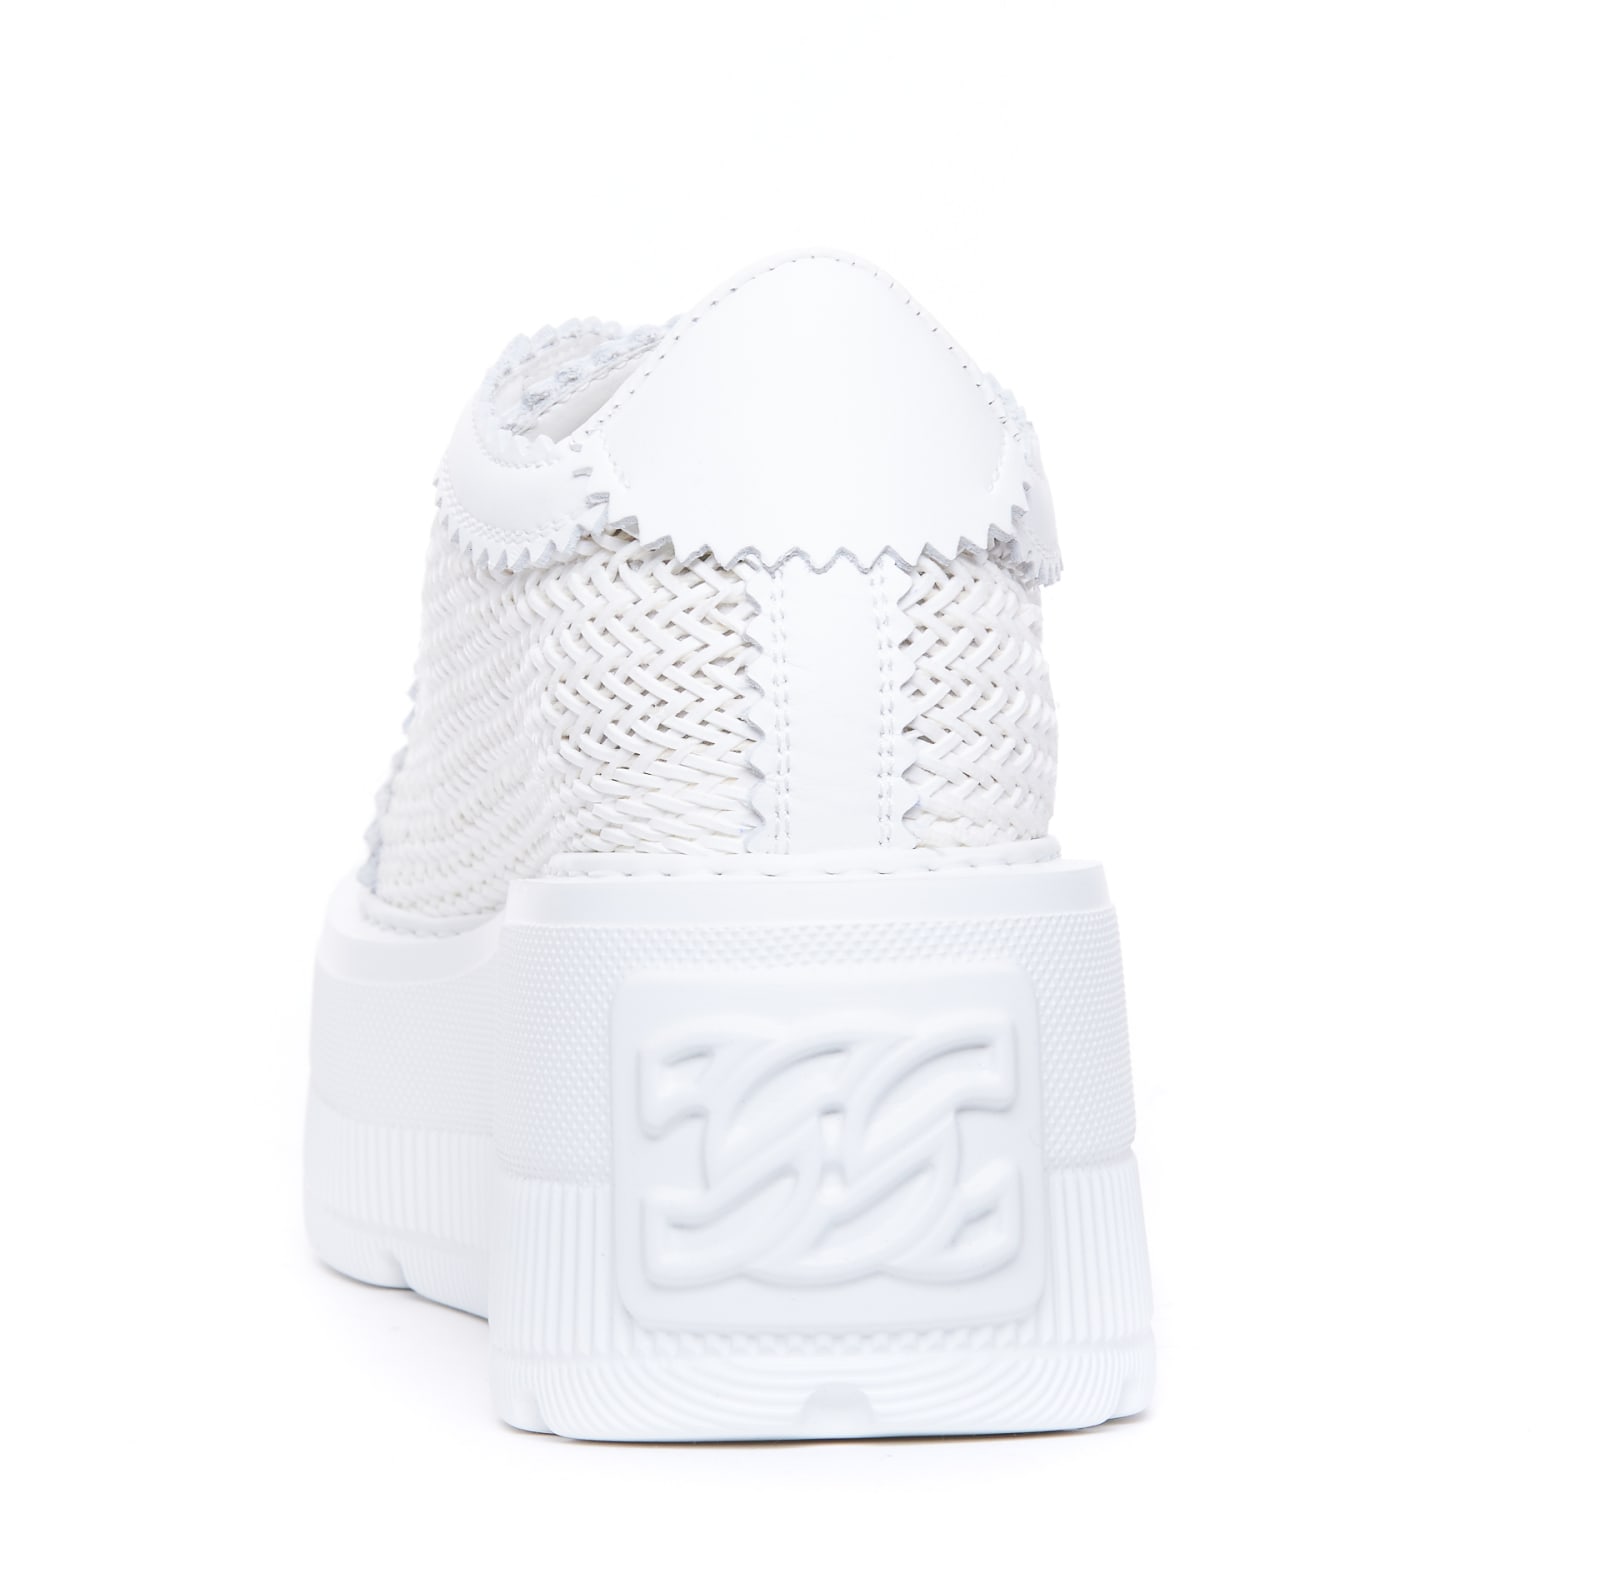 Shop Casadei Nexus Sneakers In White